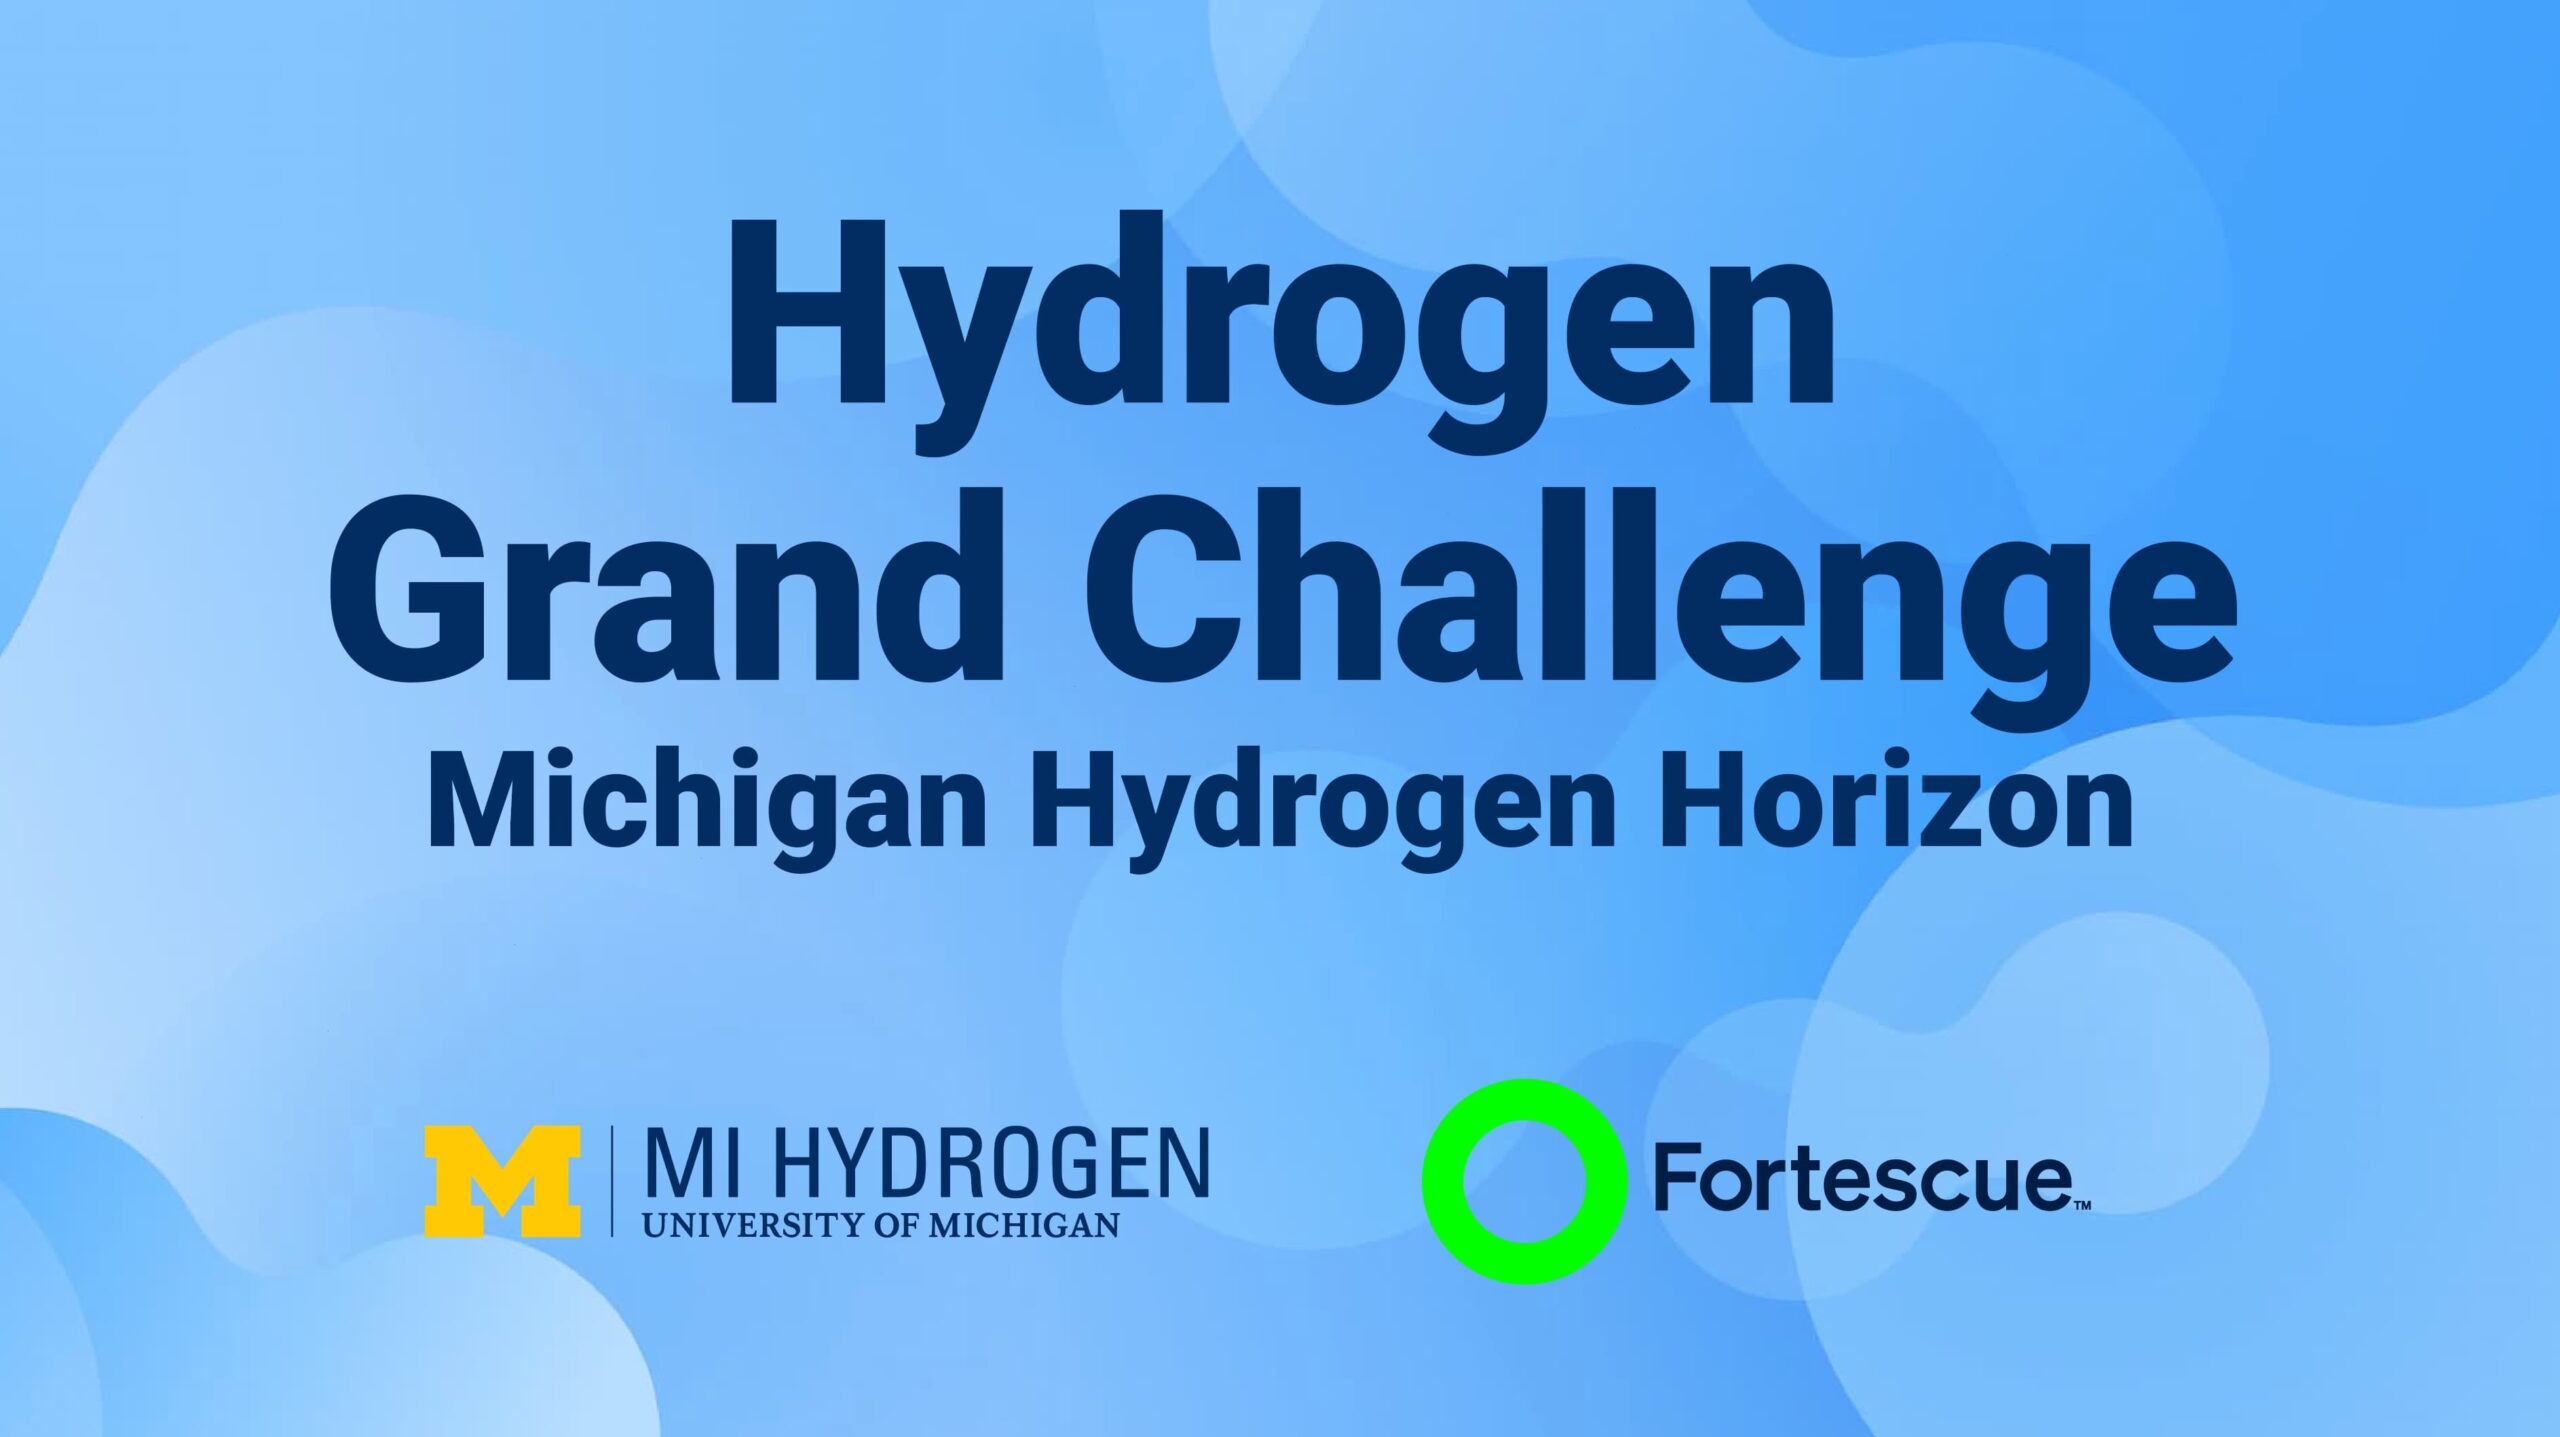 Hydrogen Grand Challenge sparks innovation among University of Michigan students